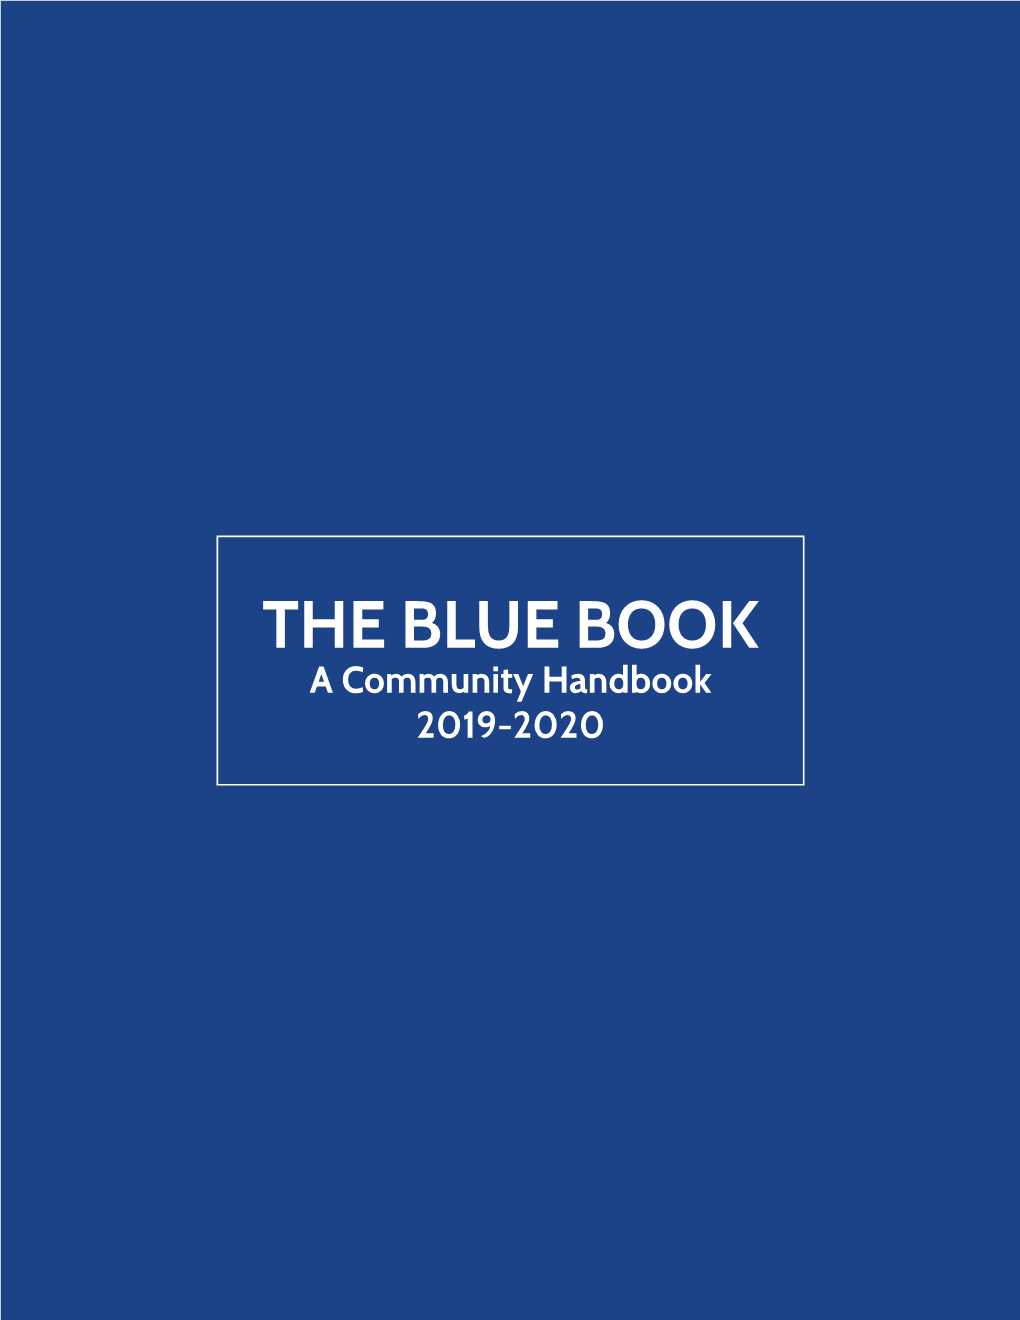 THE BLUE BOOK a Community Handbook 2019-2020 CALENDAR 2019-2020